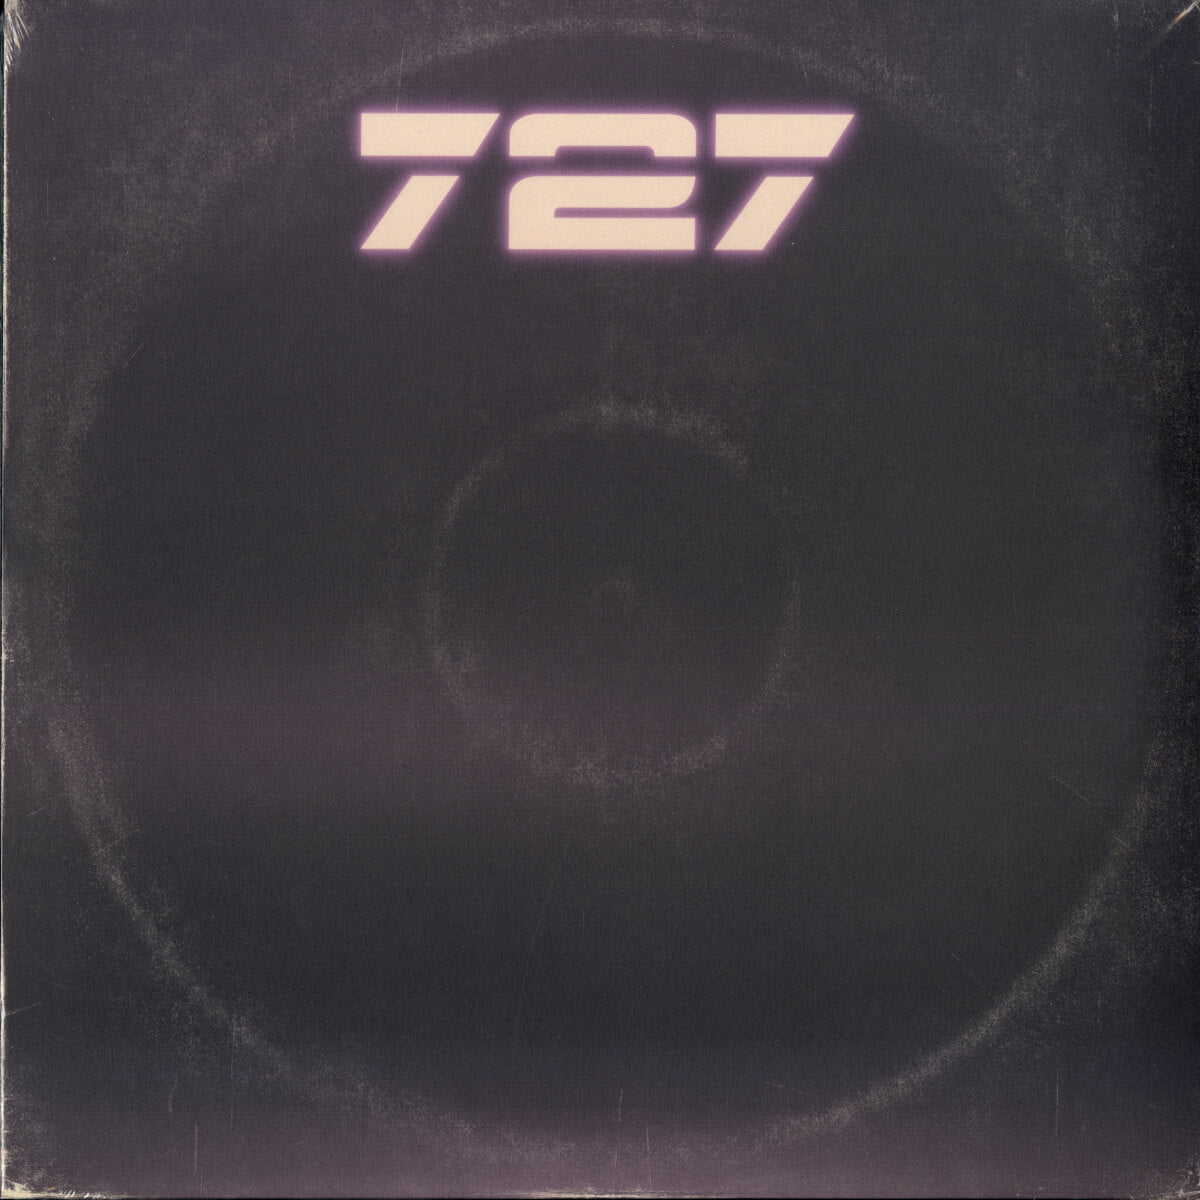 RTR – 727